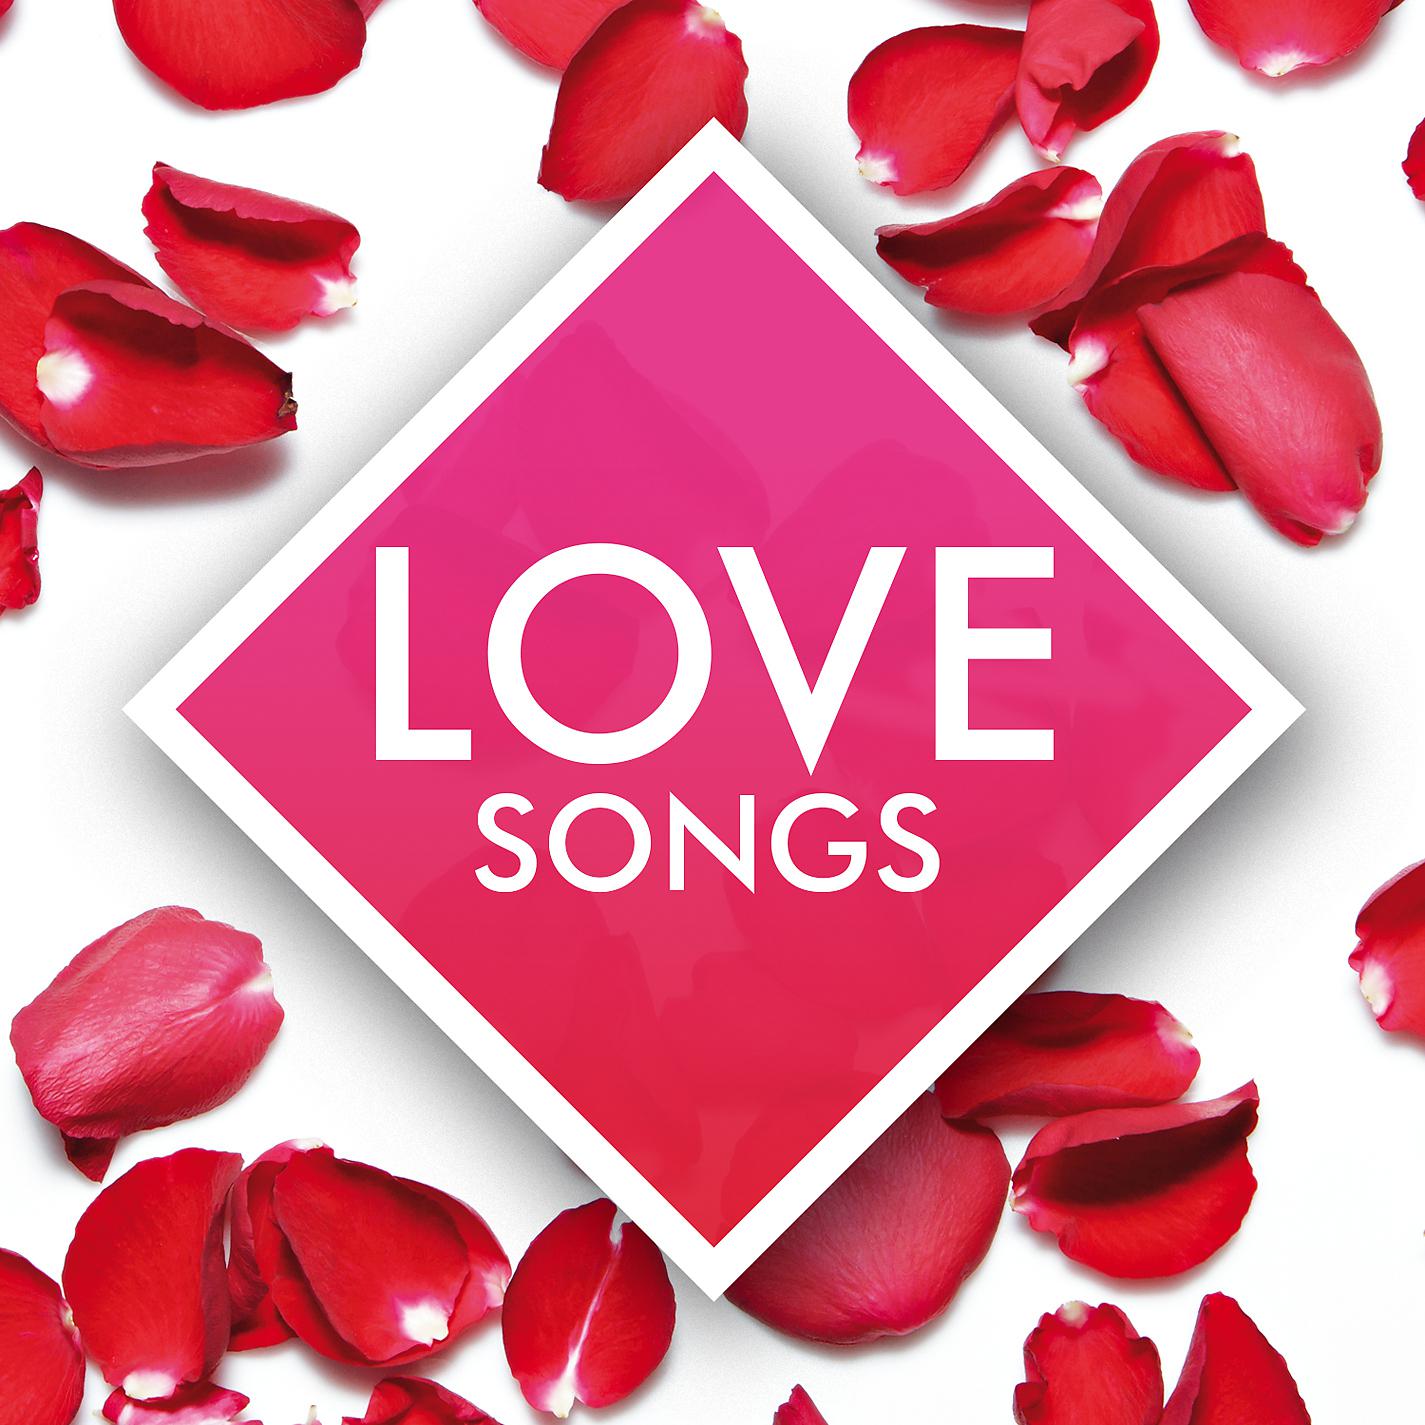 Collection музыка. ˡᵒᵛᵉ ˢᵒⁿᵍˢ. Love Songs. Love Songs collection. Песни Love.